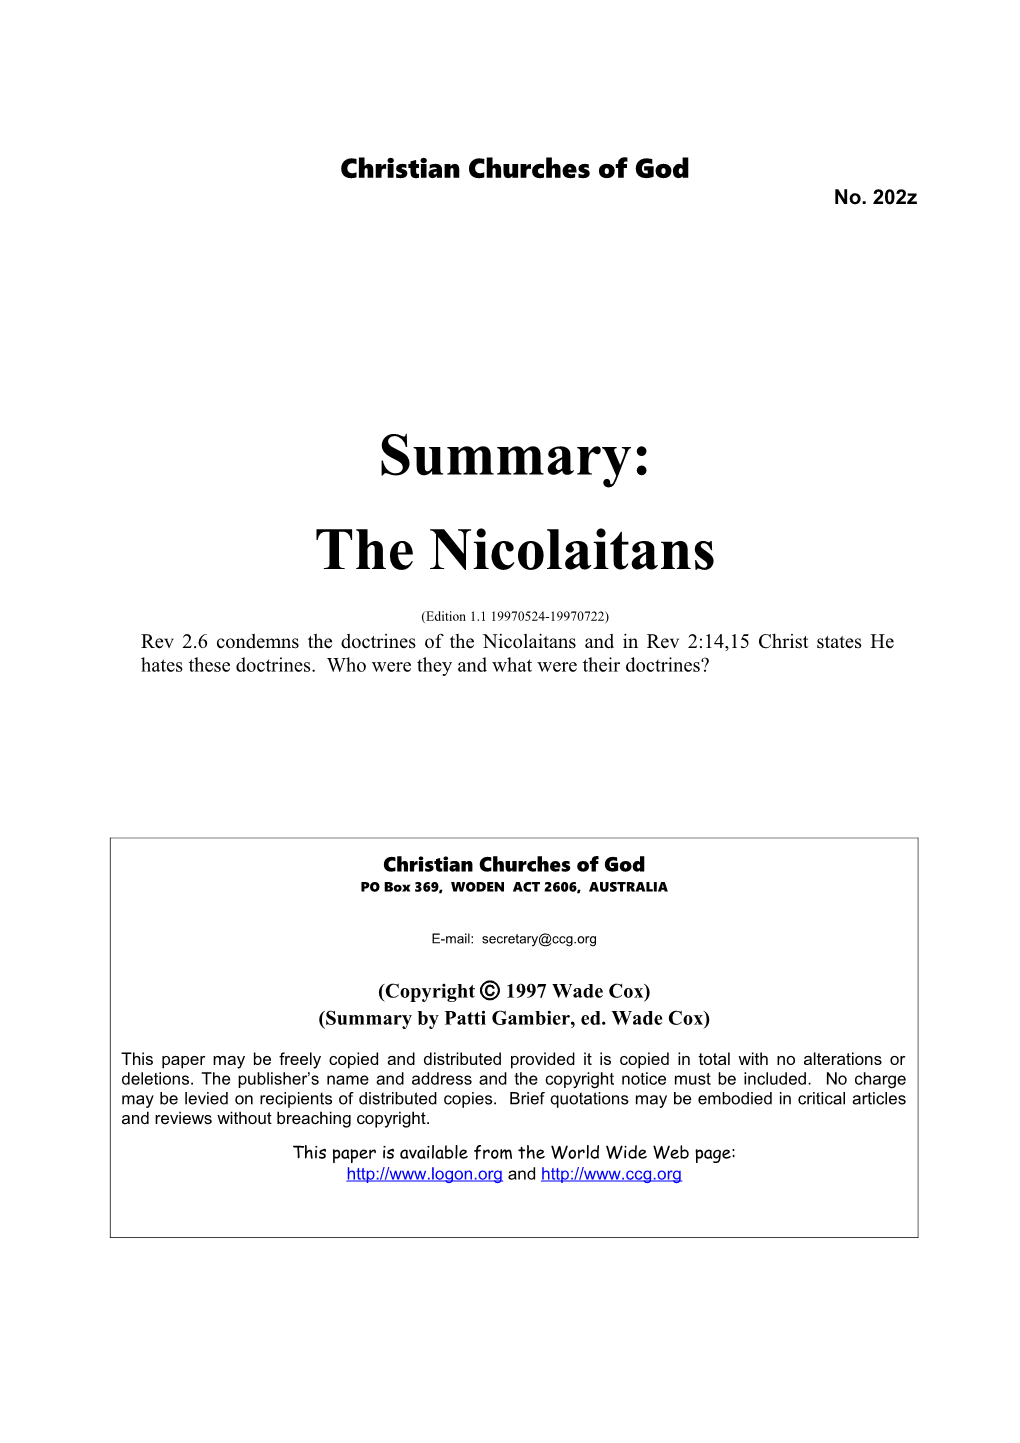 Summary: the Nicolaitans (No. 202Z)